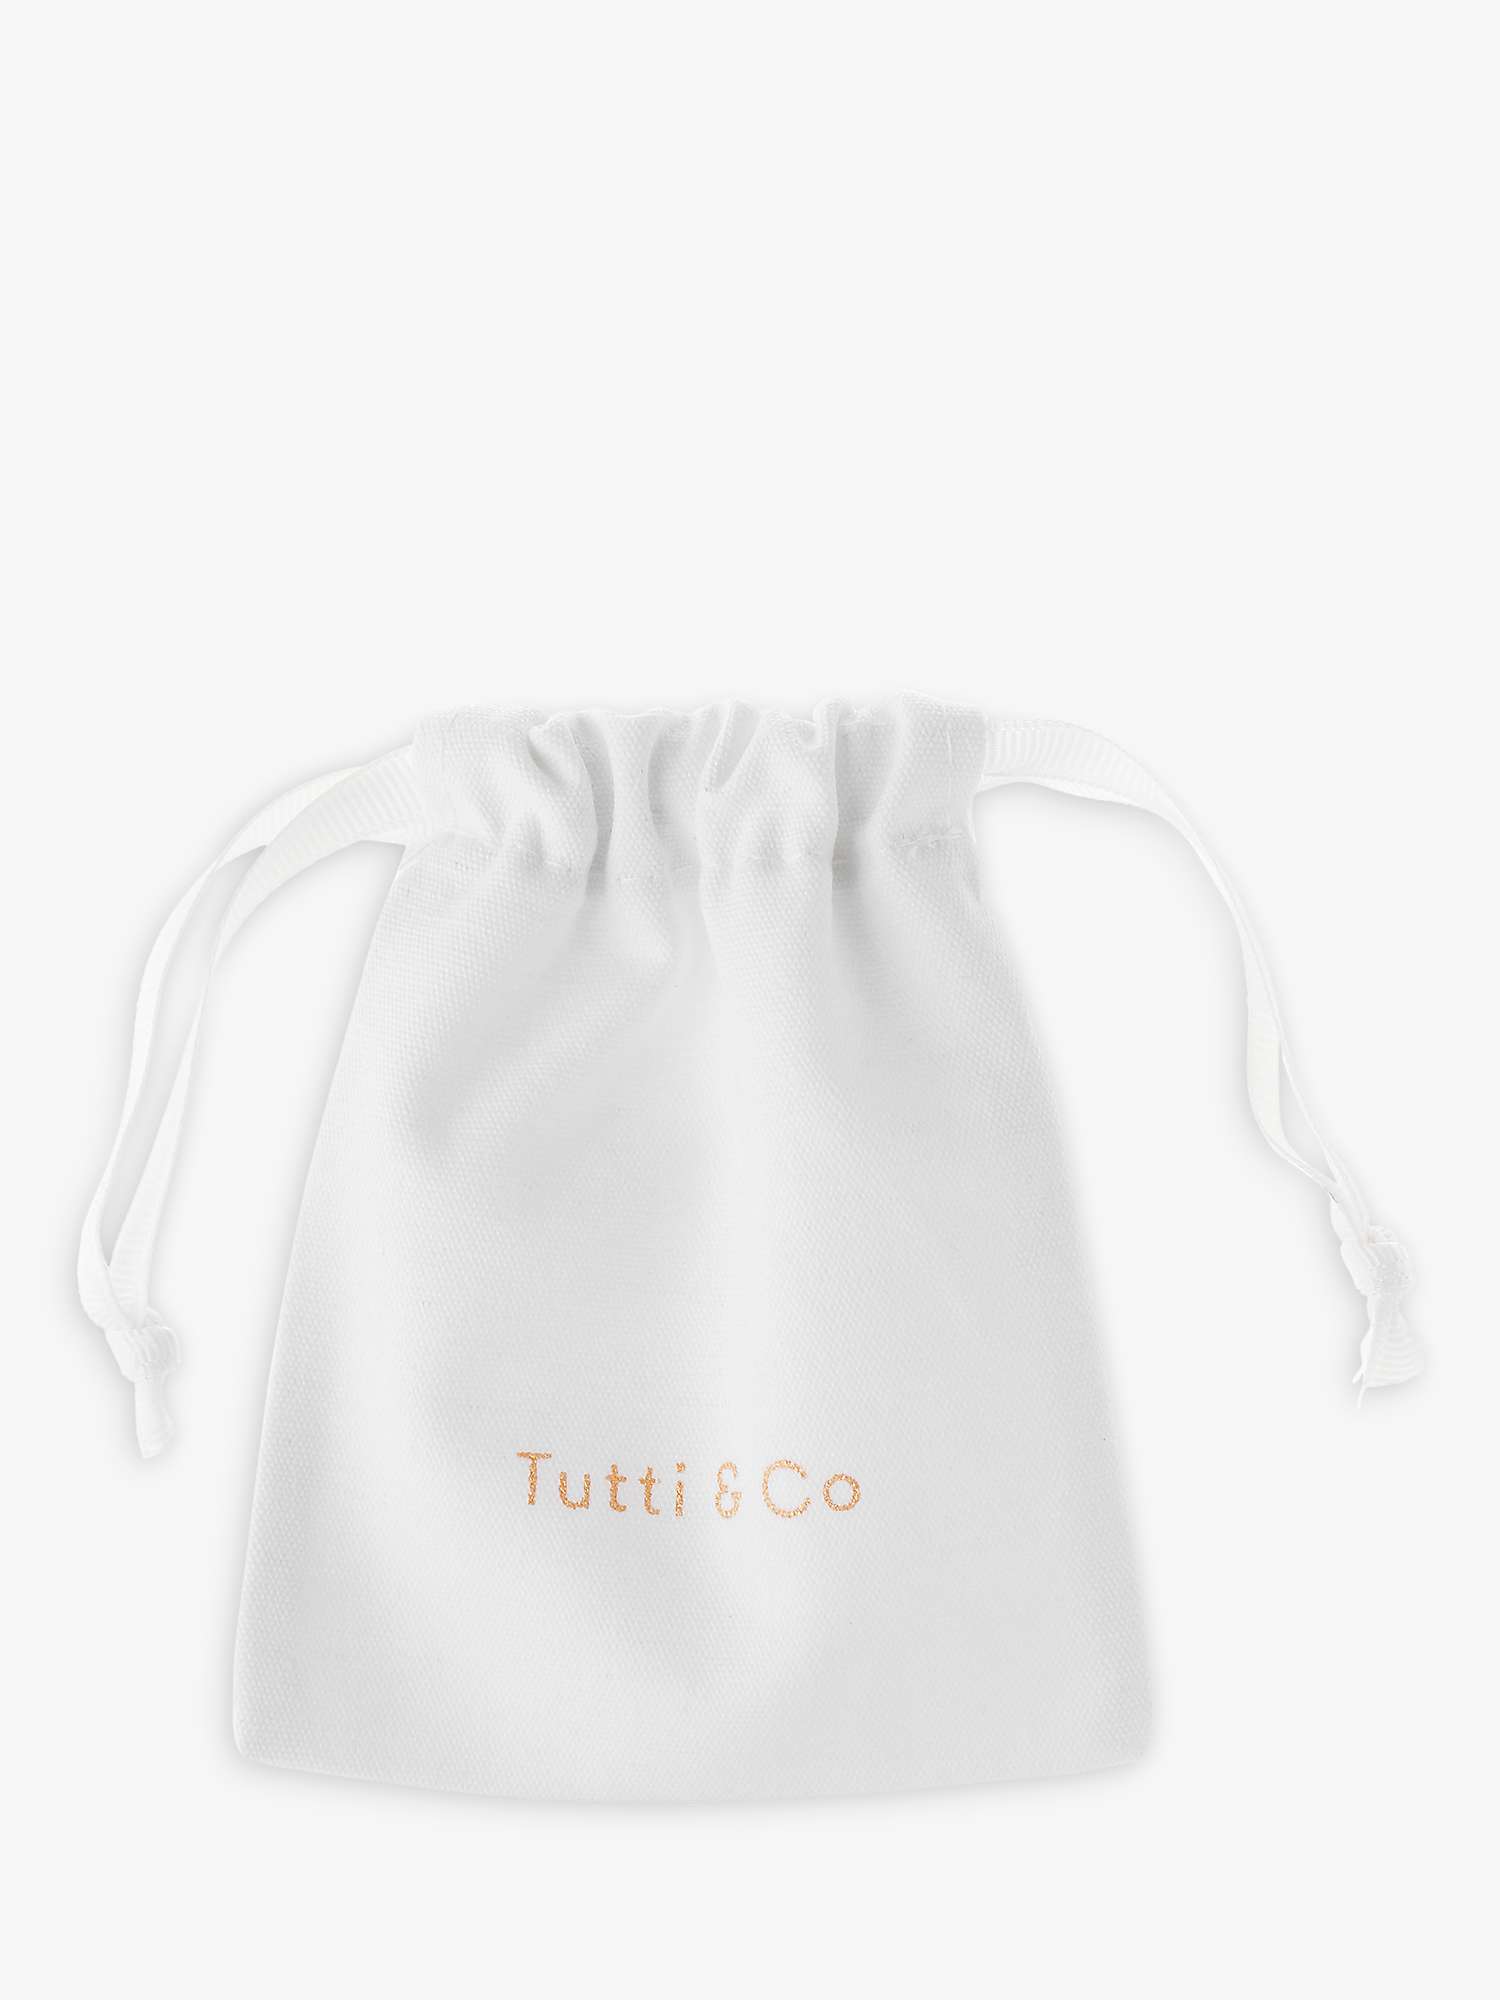 Buy Tutti & Co Coastal Brushed Round Stud Earrings Online at johnlewis.com